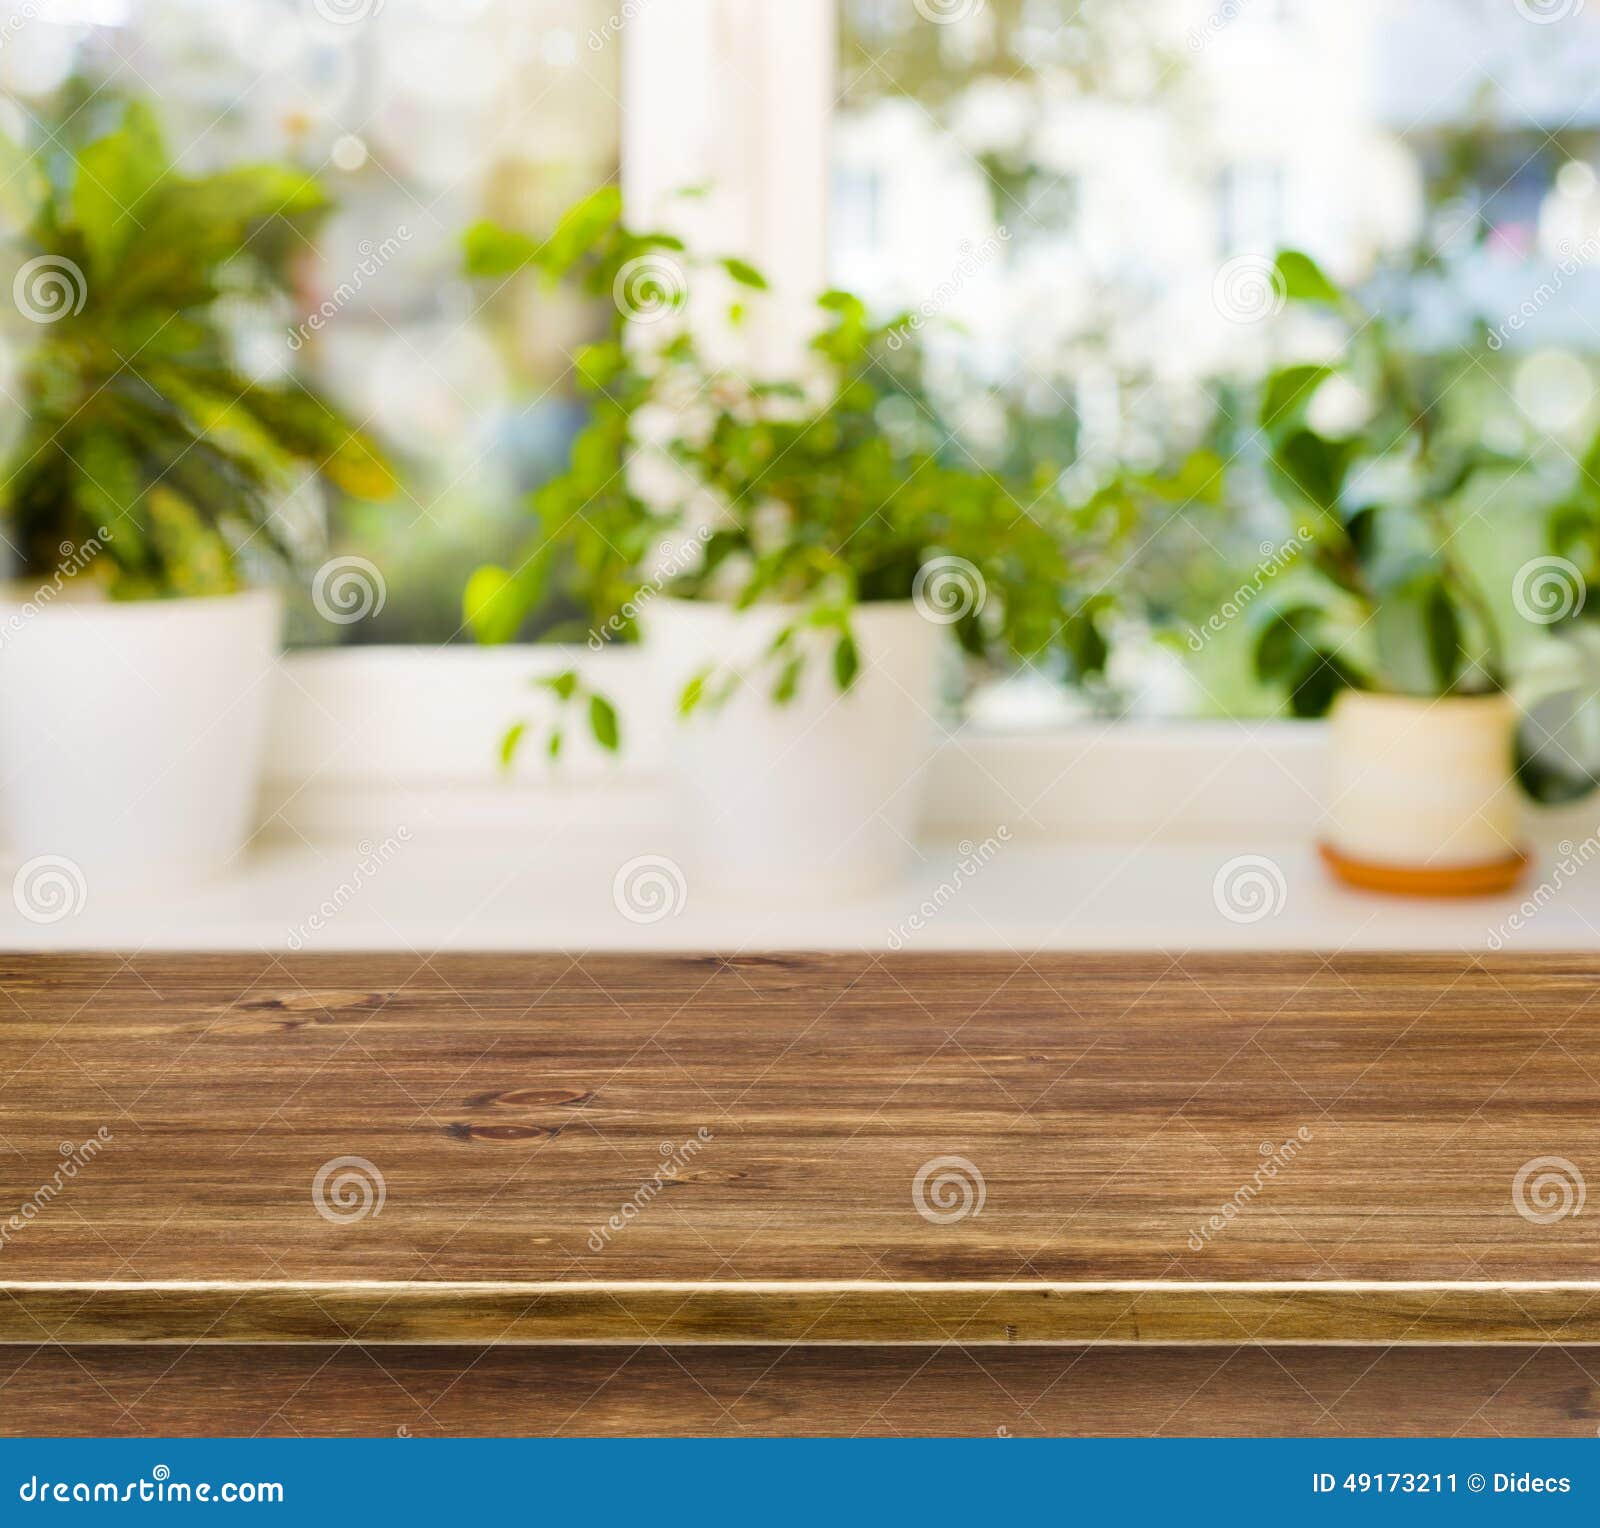 wooden table on defocused windowsill background